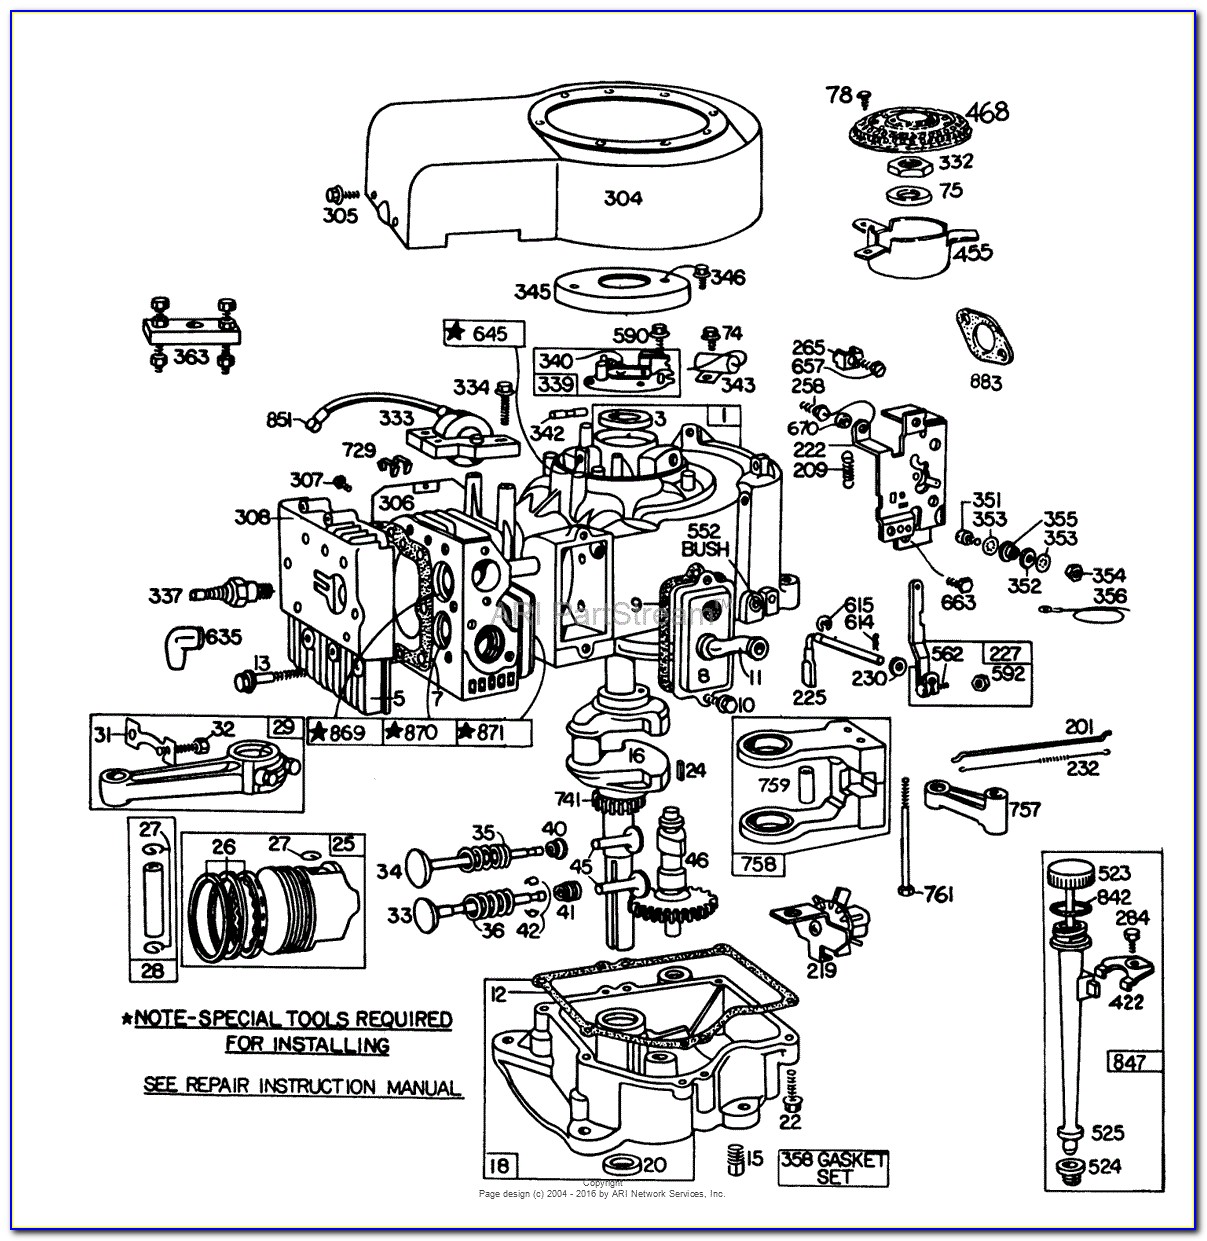 20 Hp Briggs And Stratton Intek Engine Parts